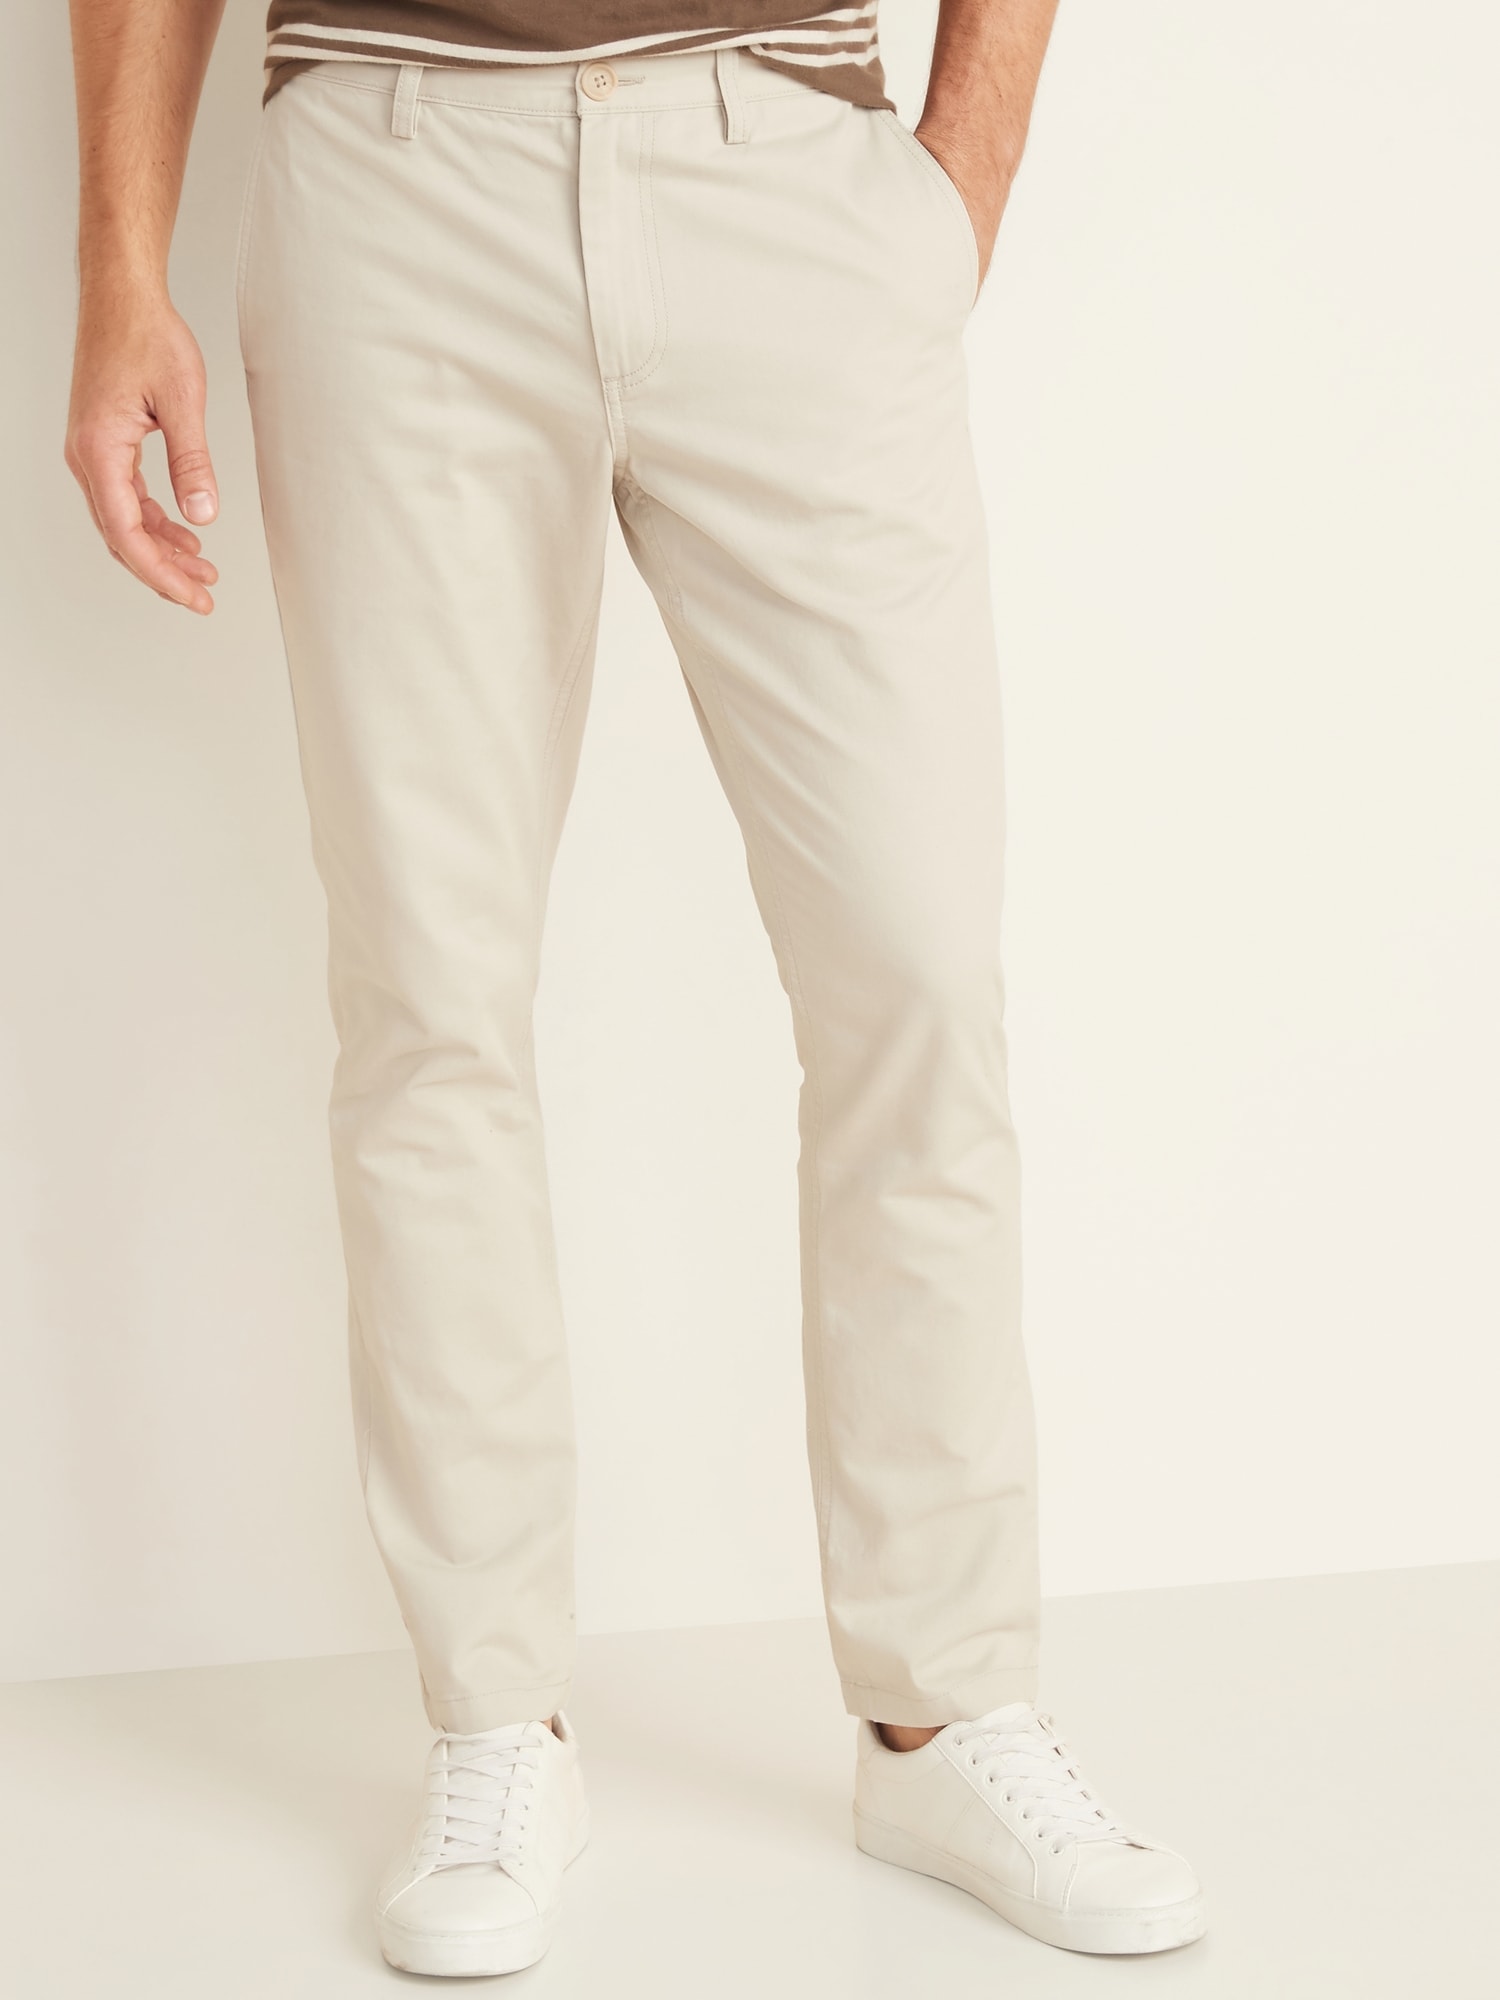 Slim Uniform Non-Stretch Chino Pants 